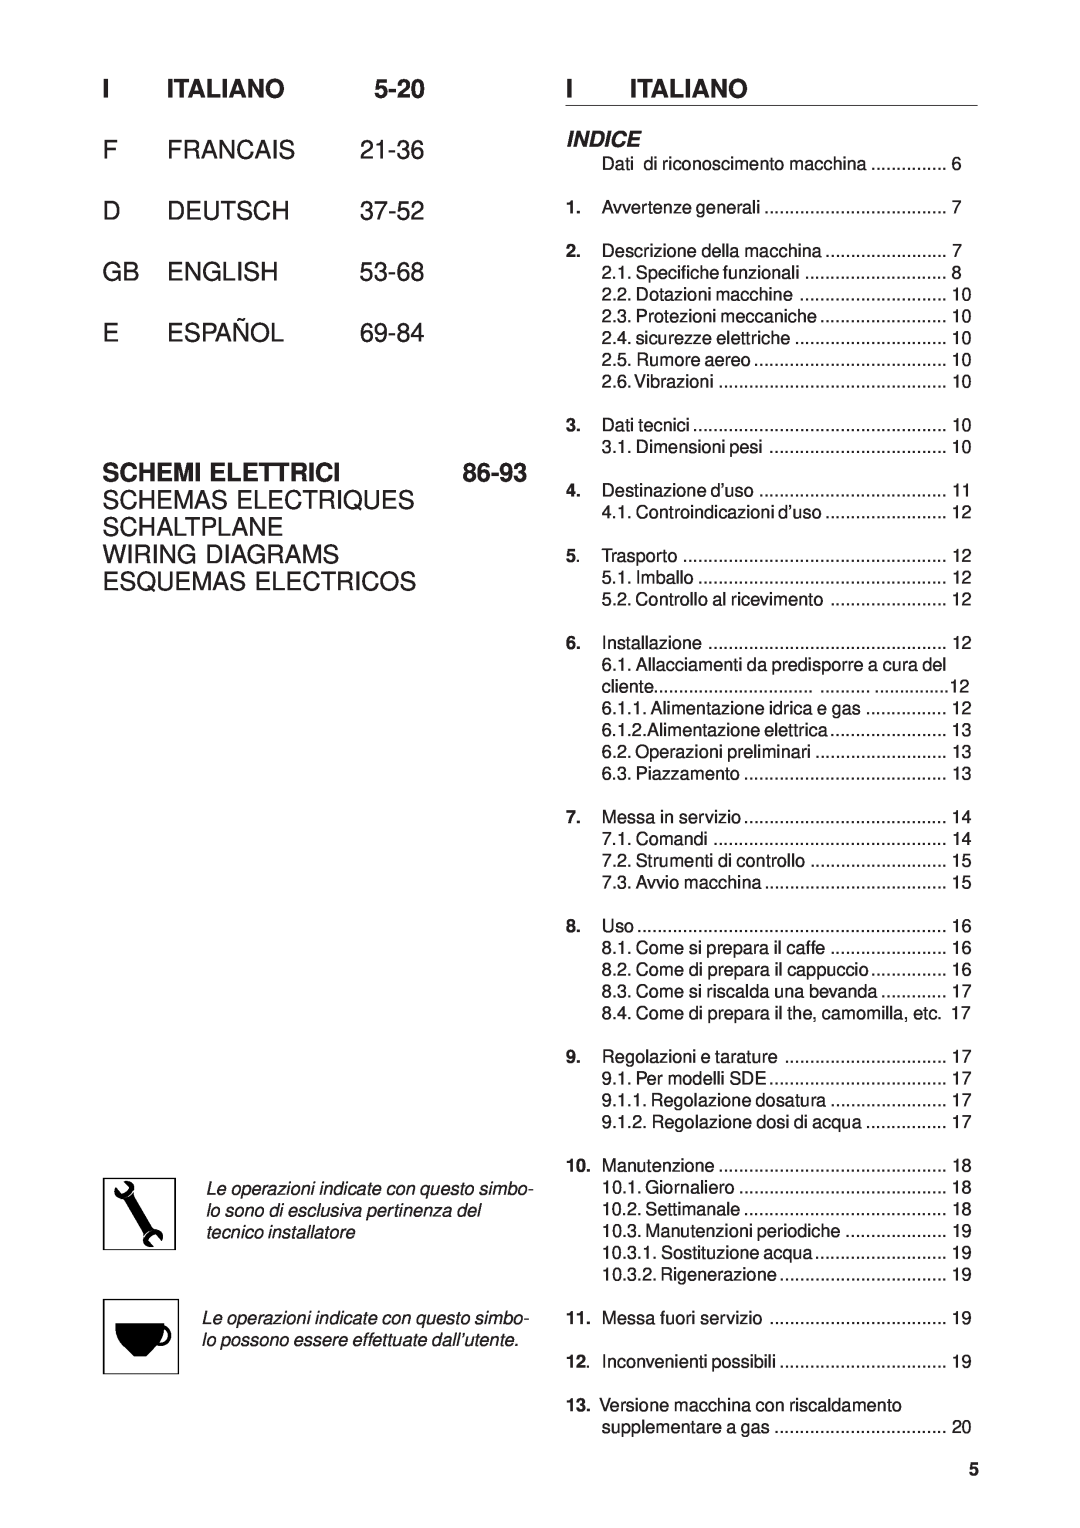 Rancilio Millennium manual I Italiano, F Francais D Deutsch, Gb English, 53-68, E Español, Schemi Elettrici, 86-93, Indice 